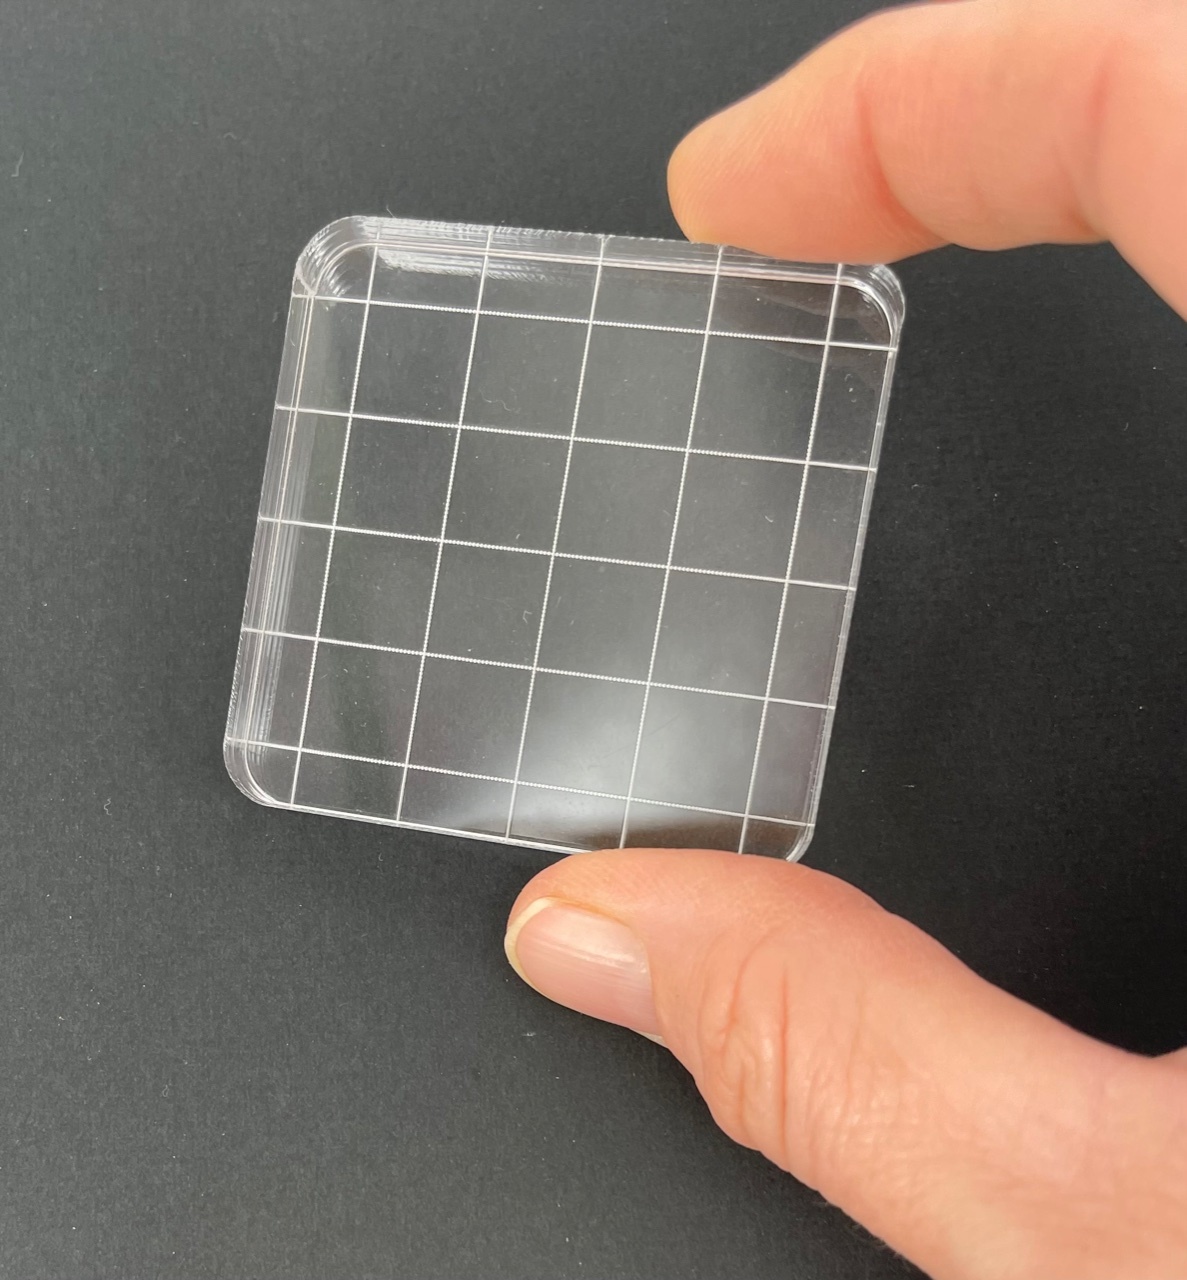 Acrylic Block 5cm x 5cm Stamp Block with Grid